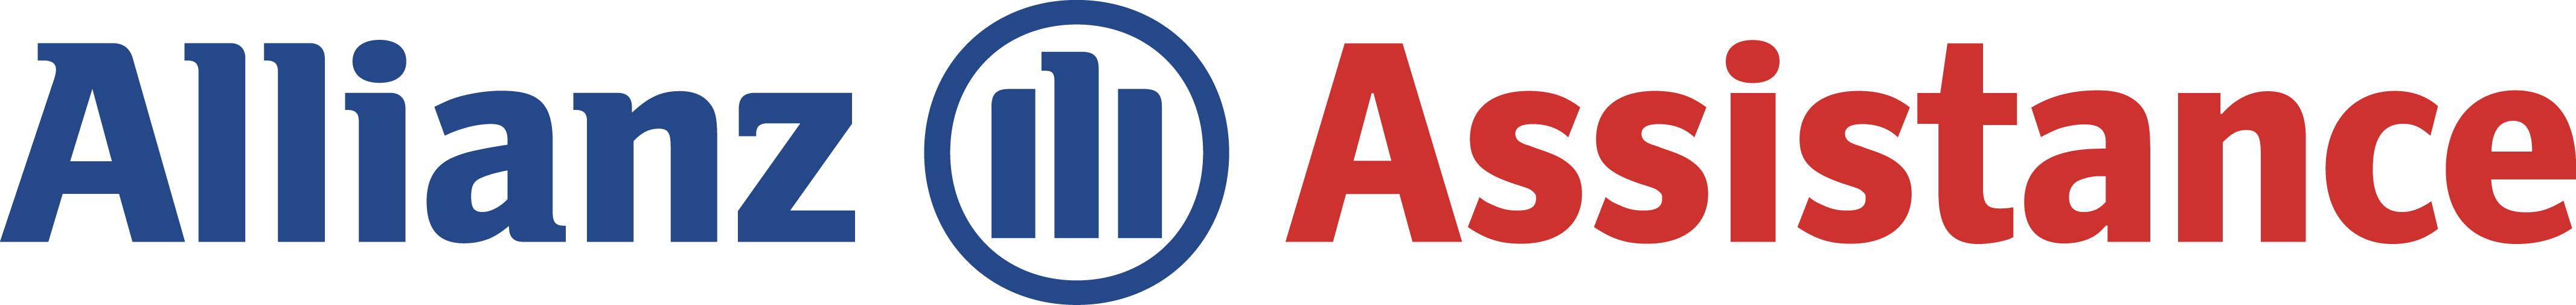 Allianz Logo - Updated June 2020.